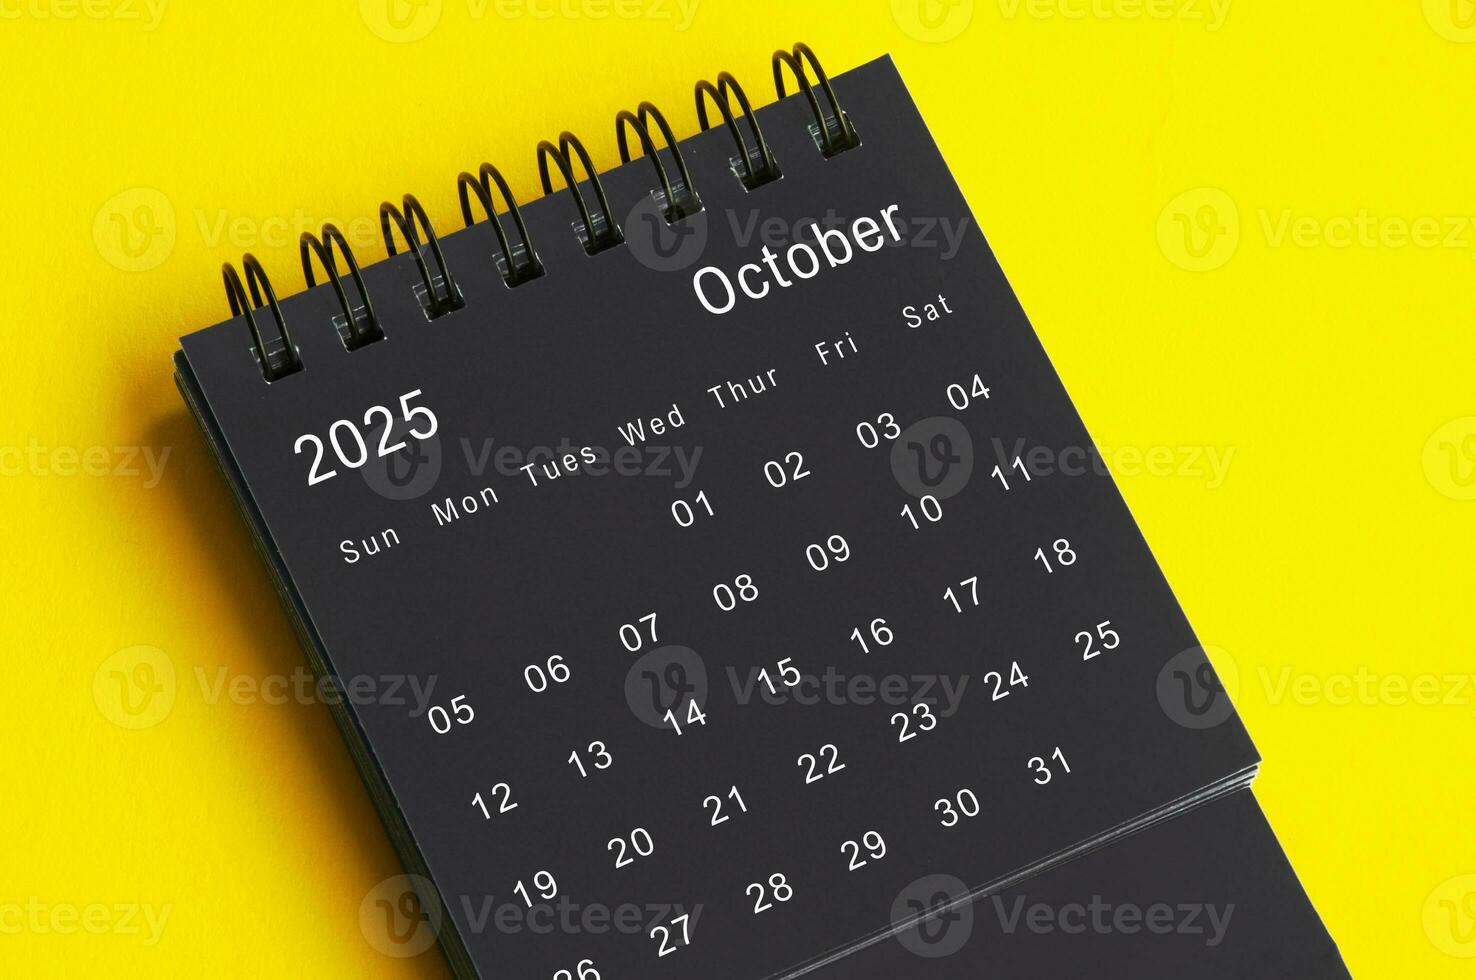 October 2025 black and white desk calendar on yellow cover background. Calendar concept photo